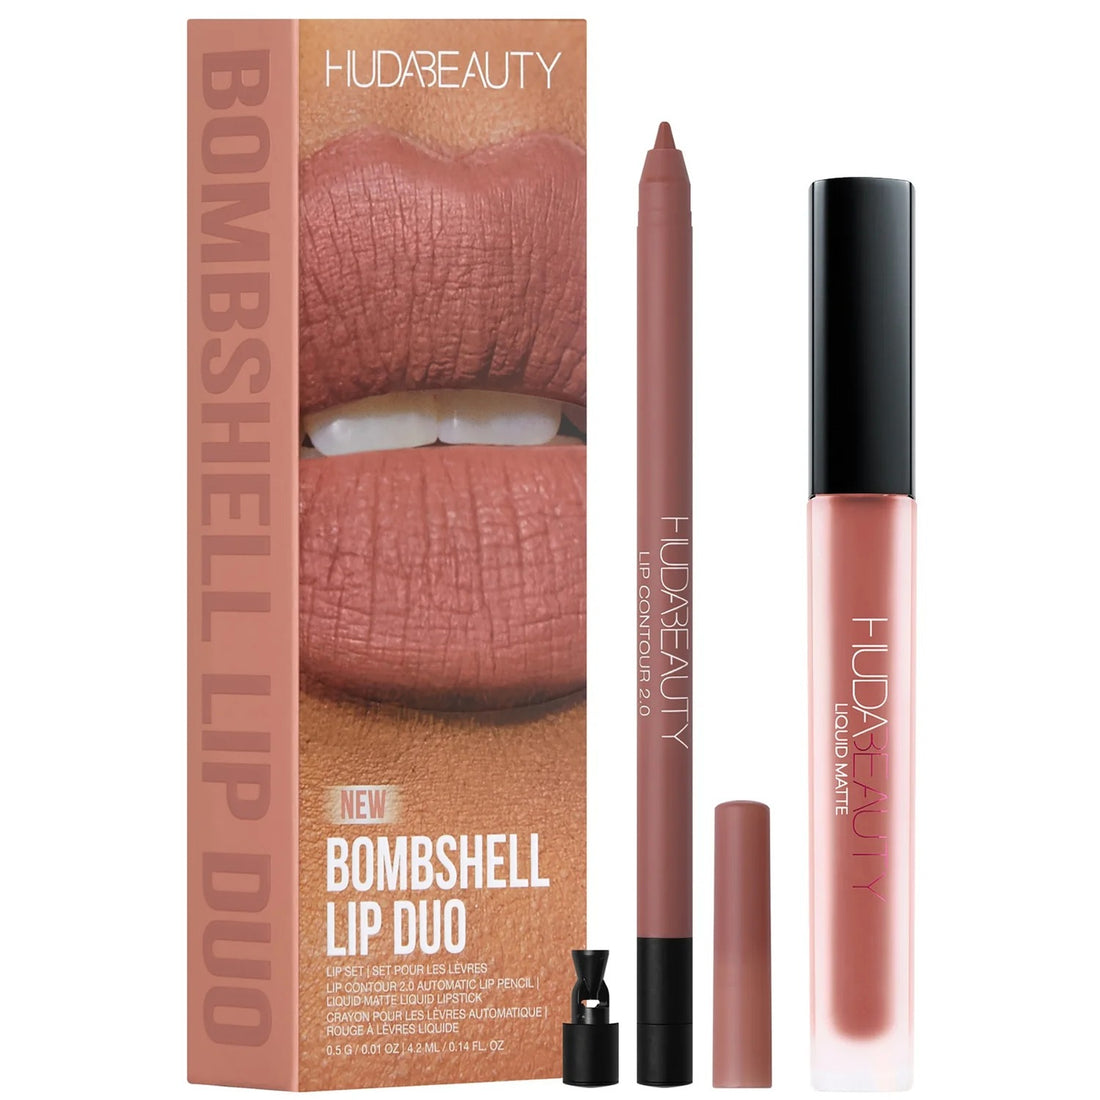 Huda Beauty Bombshell Lip Duo Set